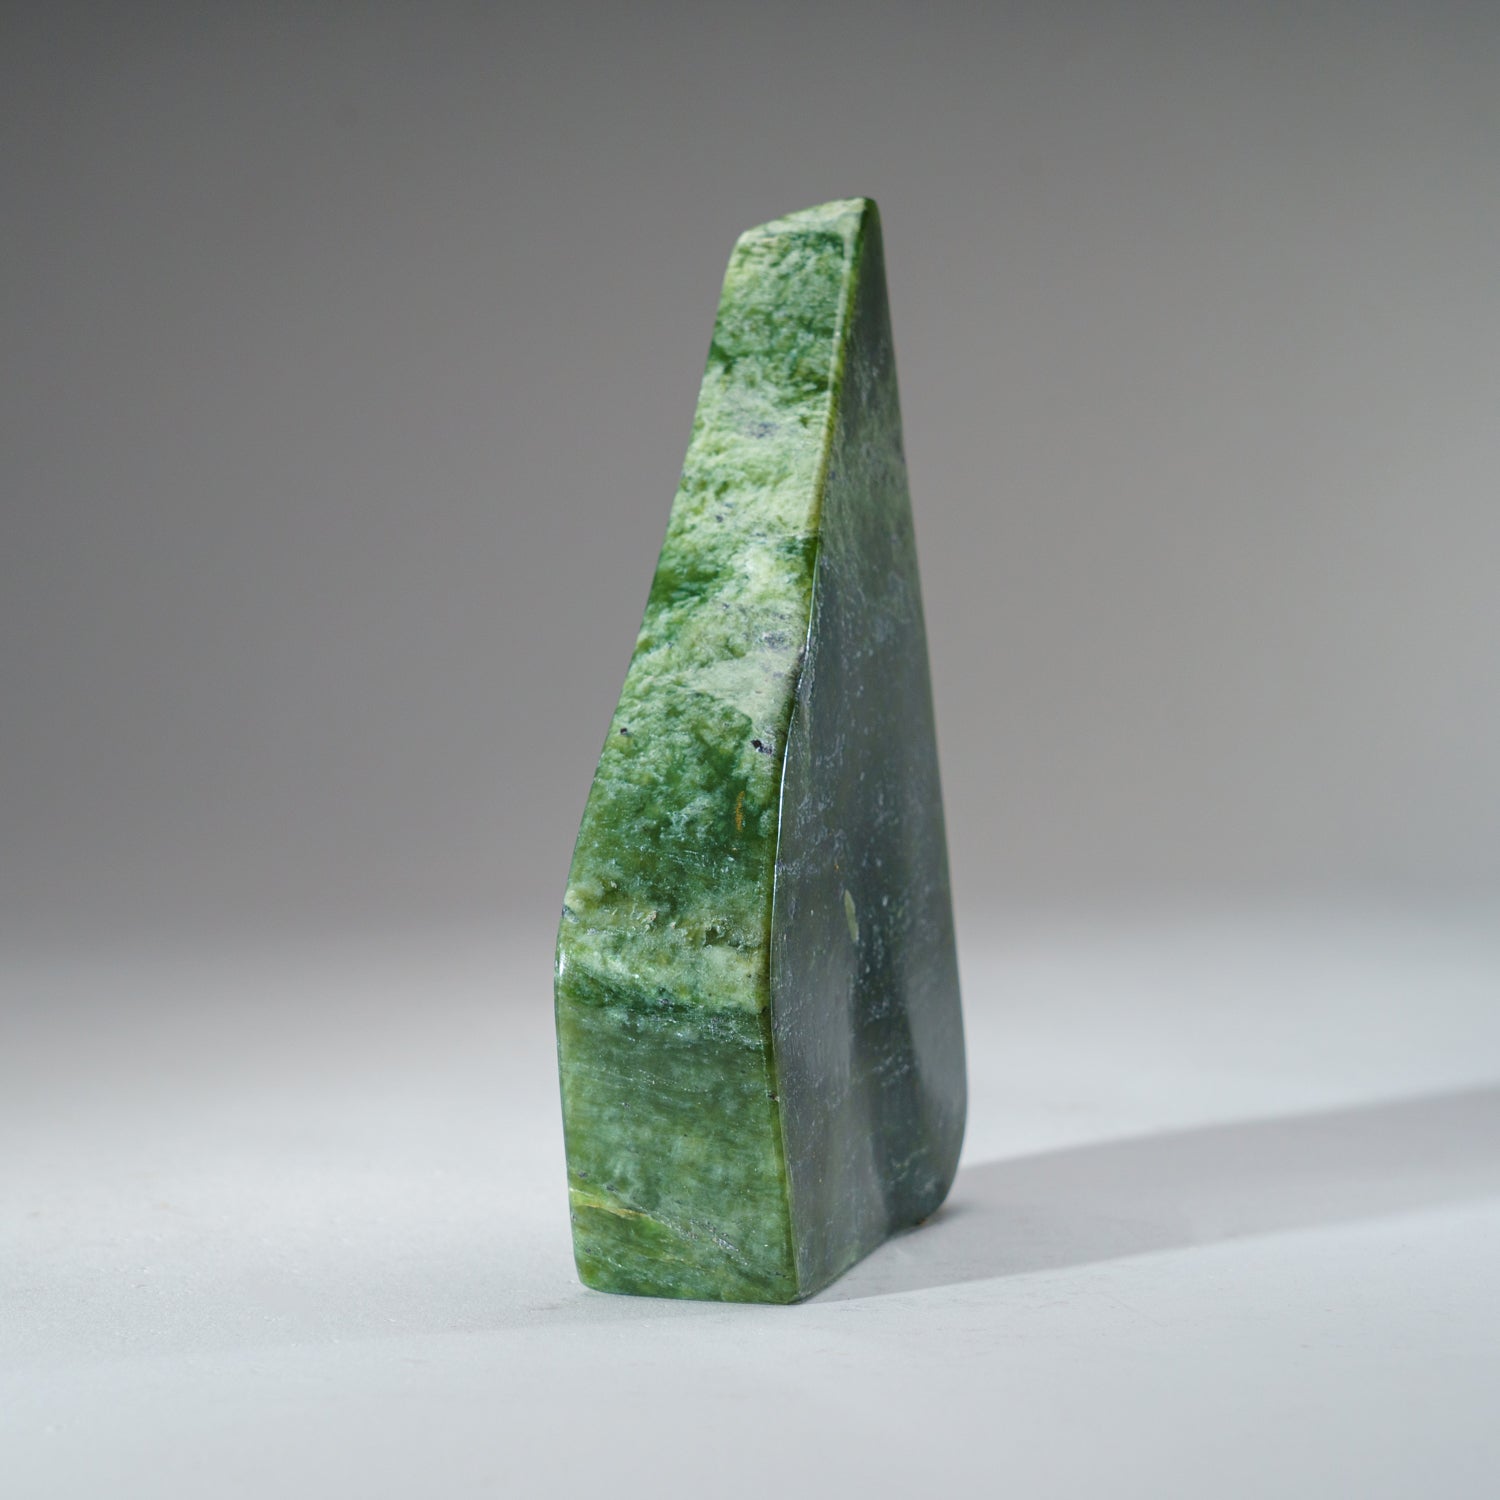 Polished Nephrite Jade Freeform from Pakistan (2 lbs)